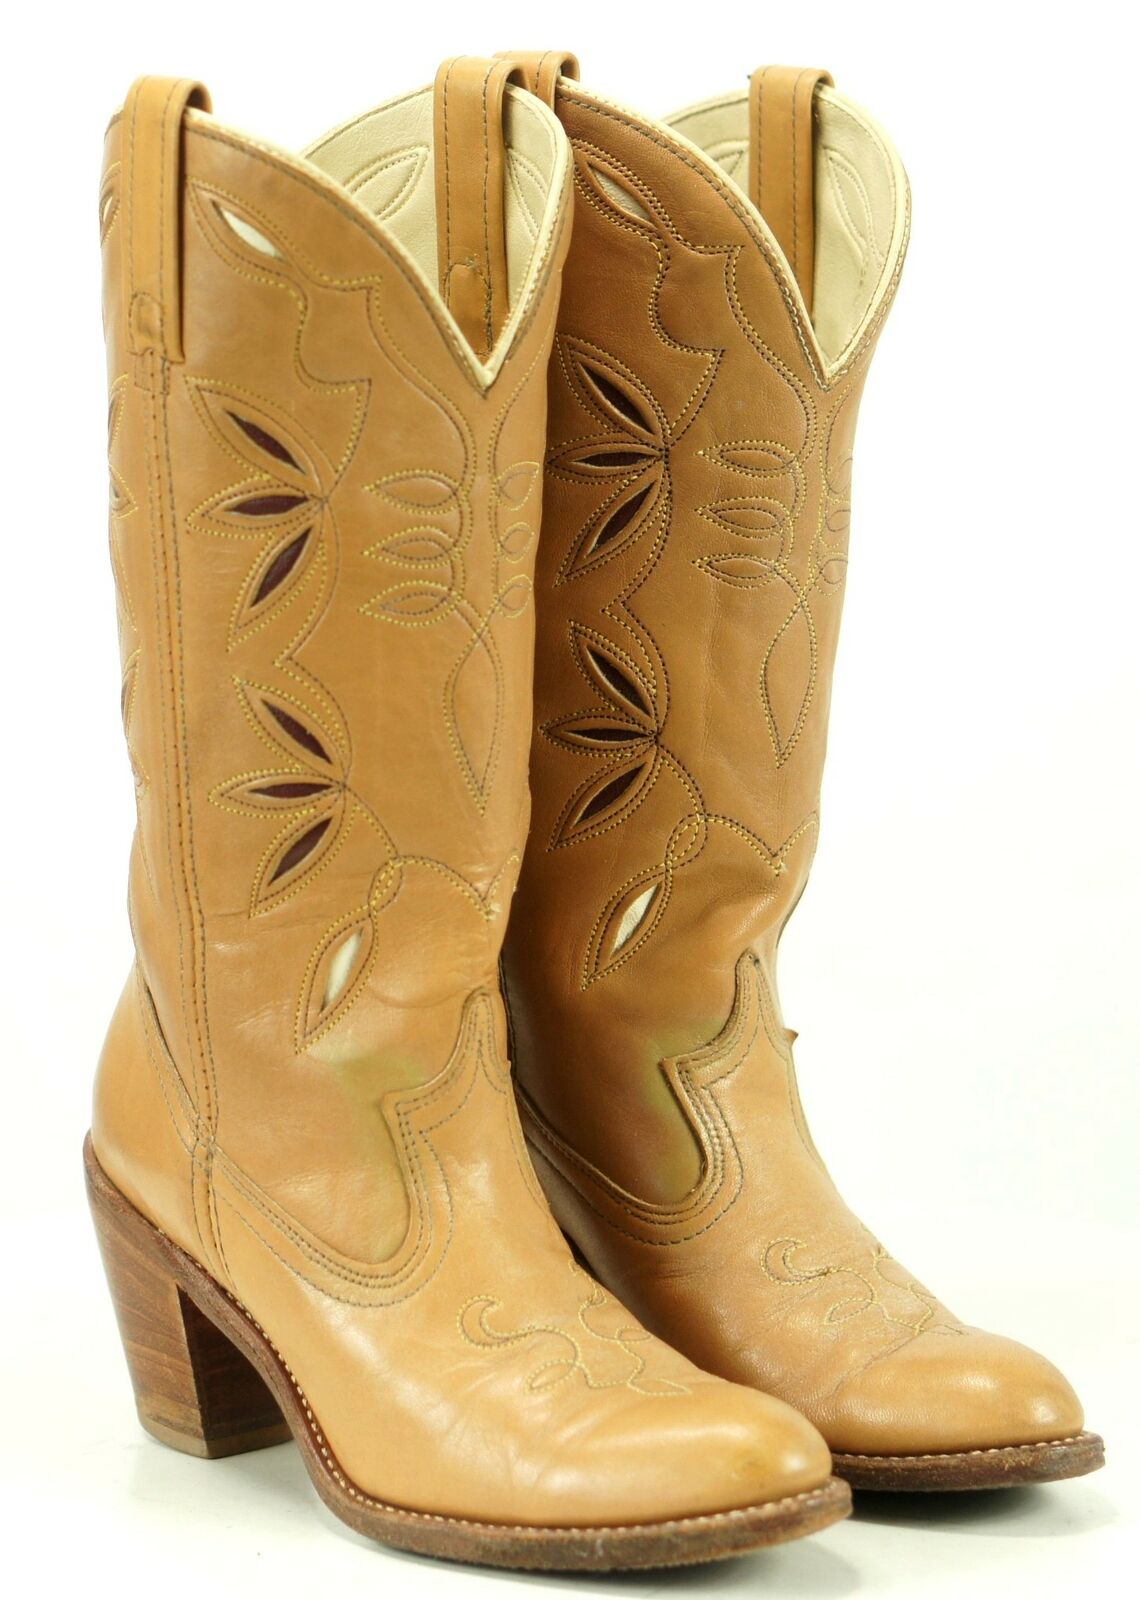 Acme Dingo Women's Flower Inlay Cowboy Boots Boho Festival Vintage US Made 7 M